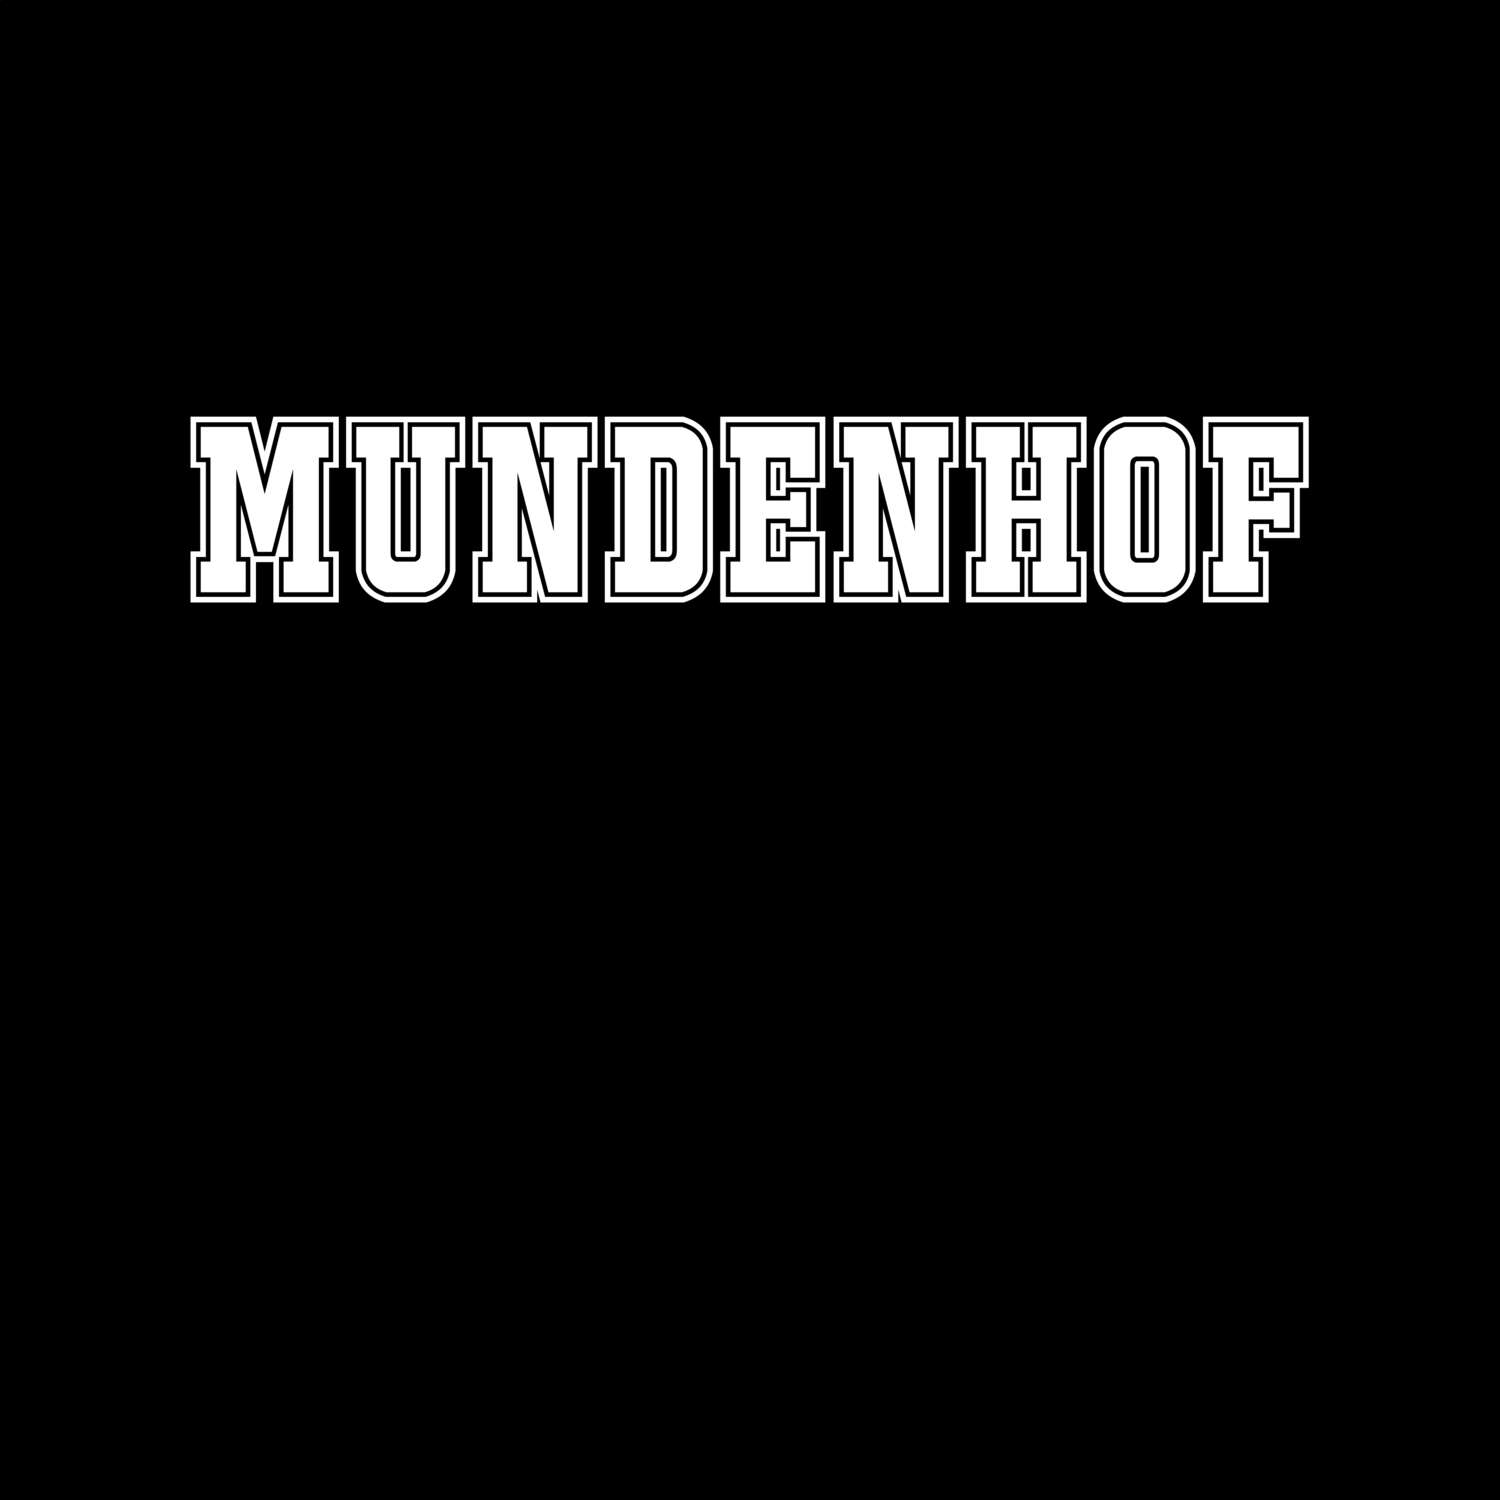 Mundenhof T-Shirt »Classic«